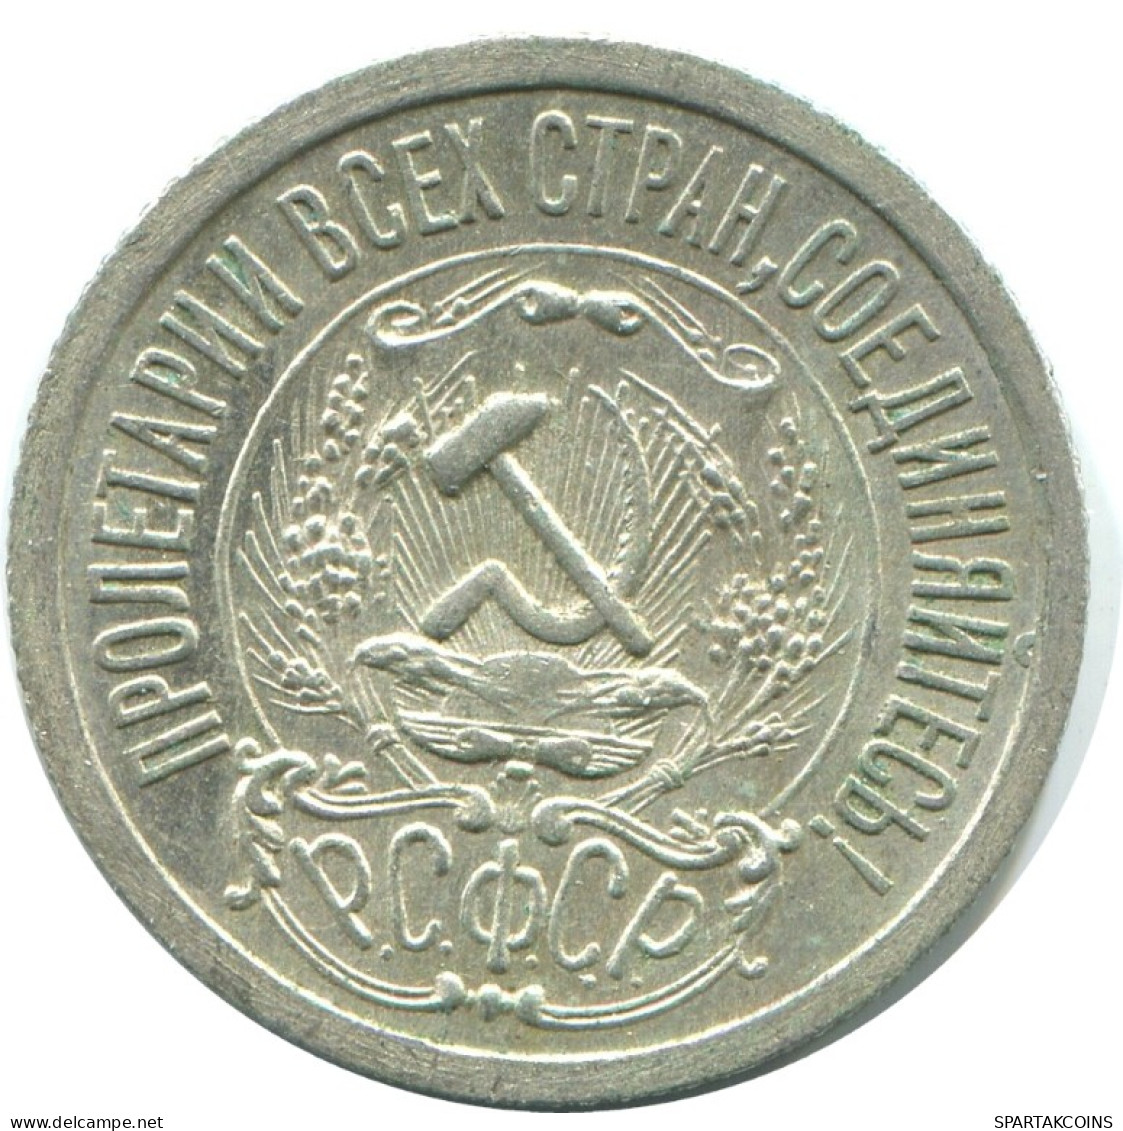 15 KOPEKS 1923 RUSSIA RSFSR SILVER Coin HIGH GRADE #AF059.4.U.A - Russie